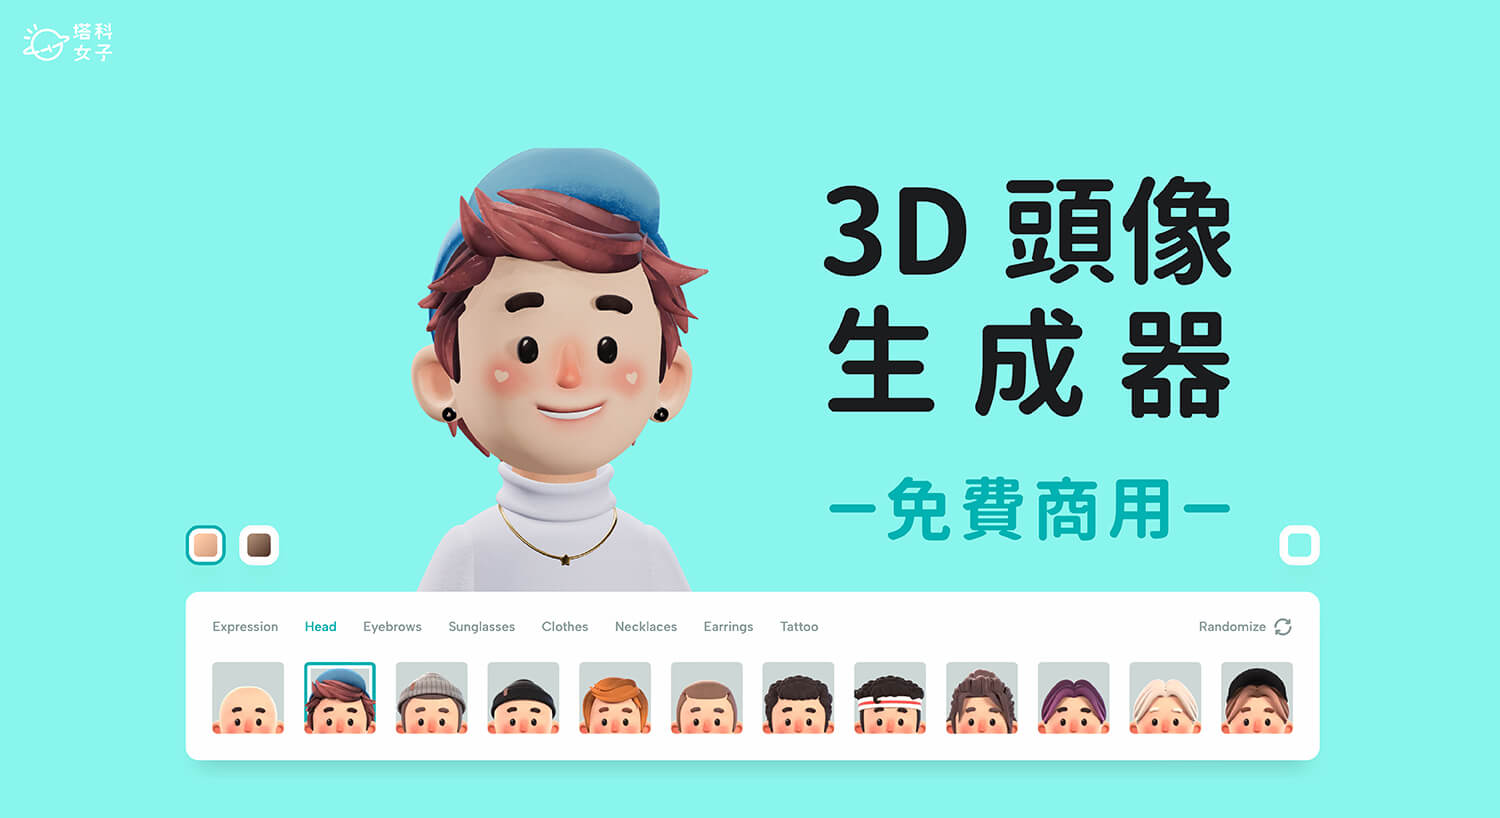 3D 頭像生成器《Peeps》 免費製作 3D 人物，自由搭配人偶五官 (可商用) - 3D 人偶, 3D 人物, 3D 頭像, 3D 頭像生成器, 大頭貼產生器, 大頭貼製作 - 塔科女子